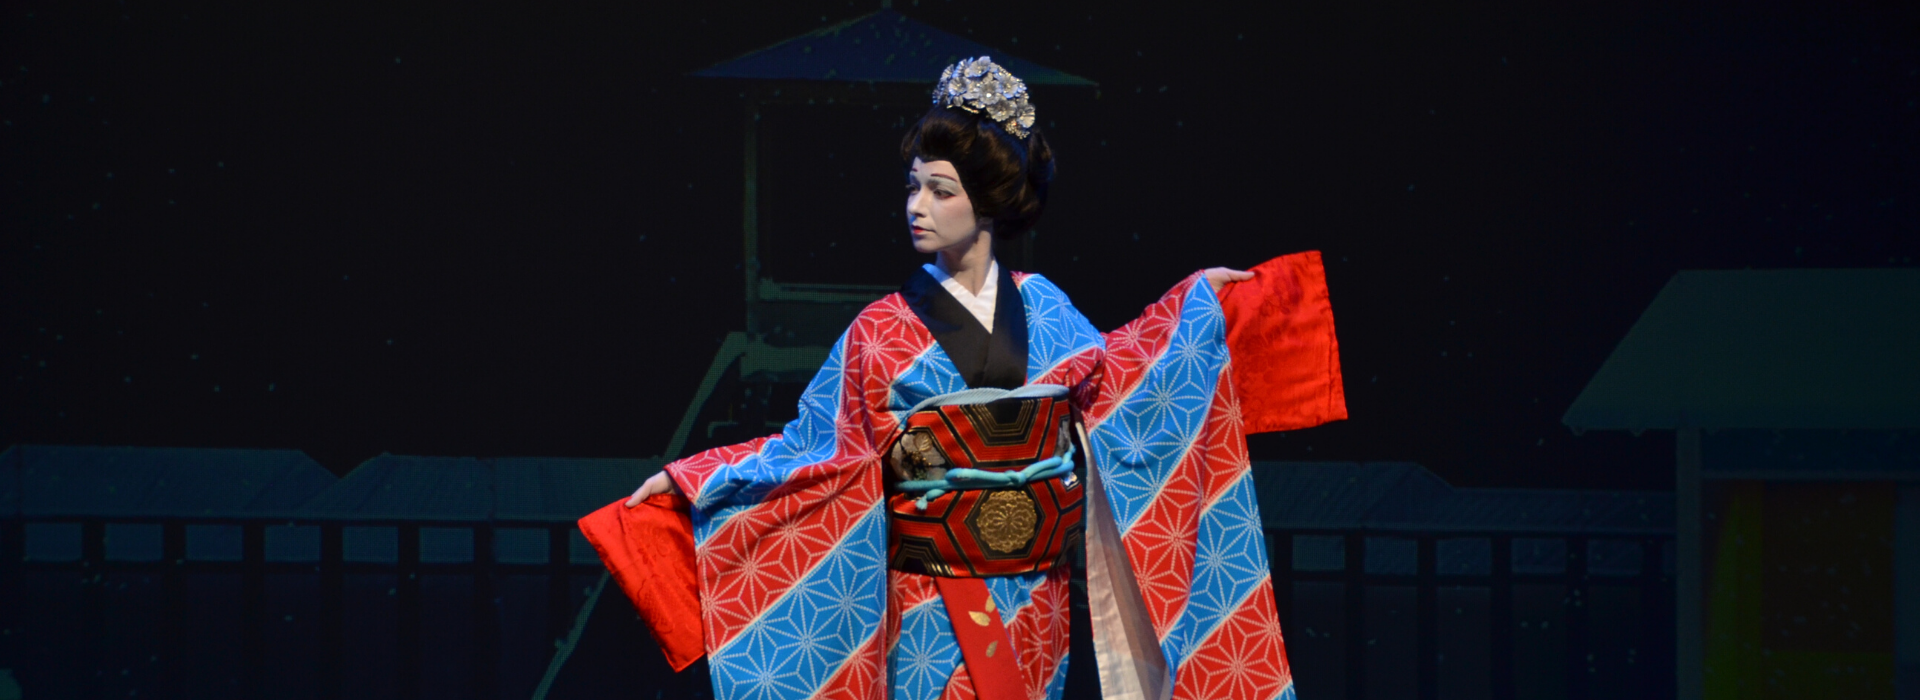 photo of Kabuki performer by Minh Ngo